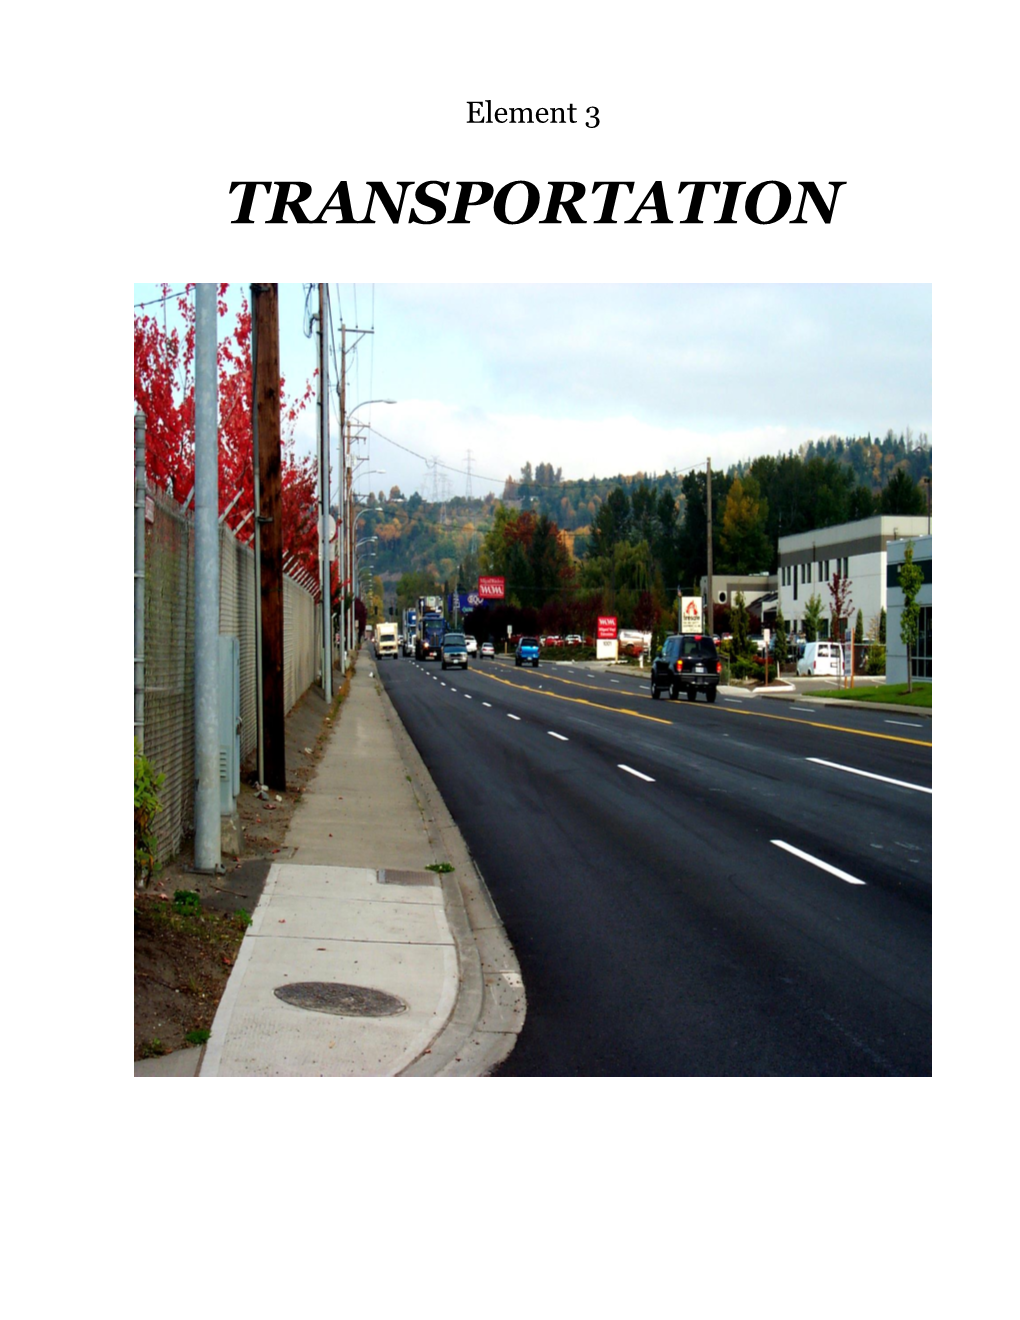 Element 3 Transportation (PDF)